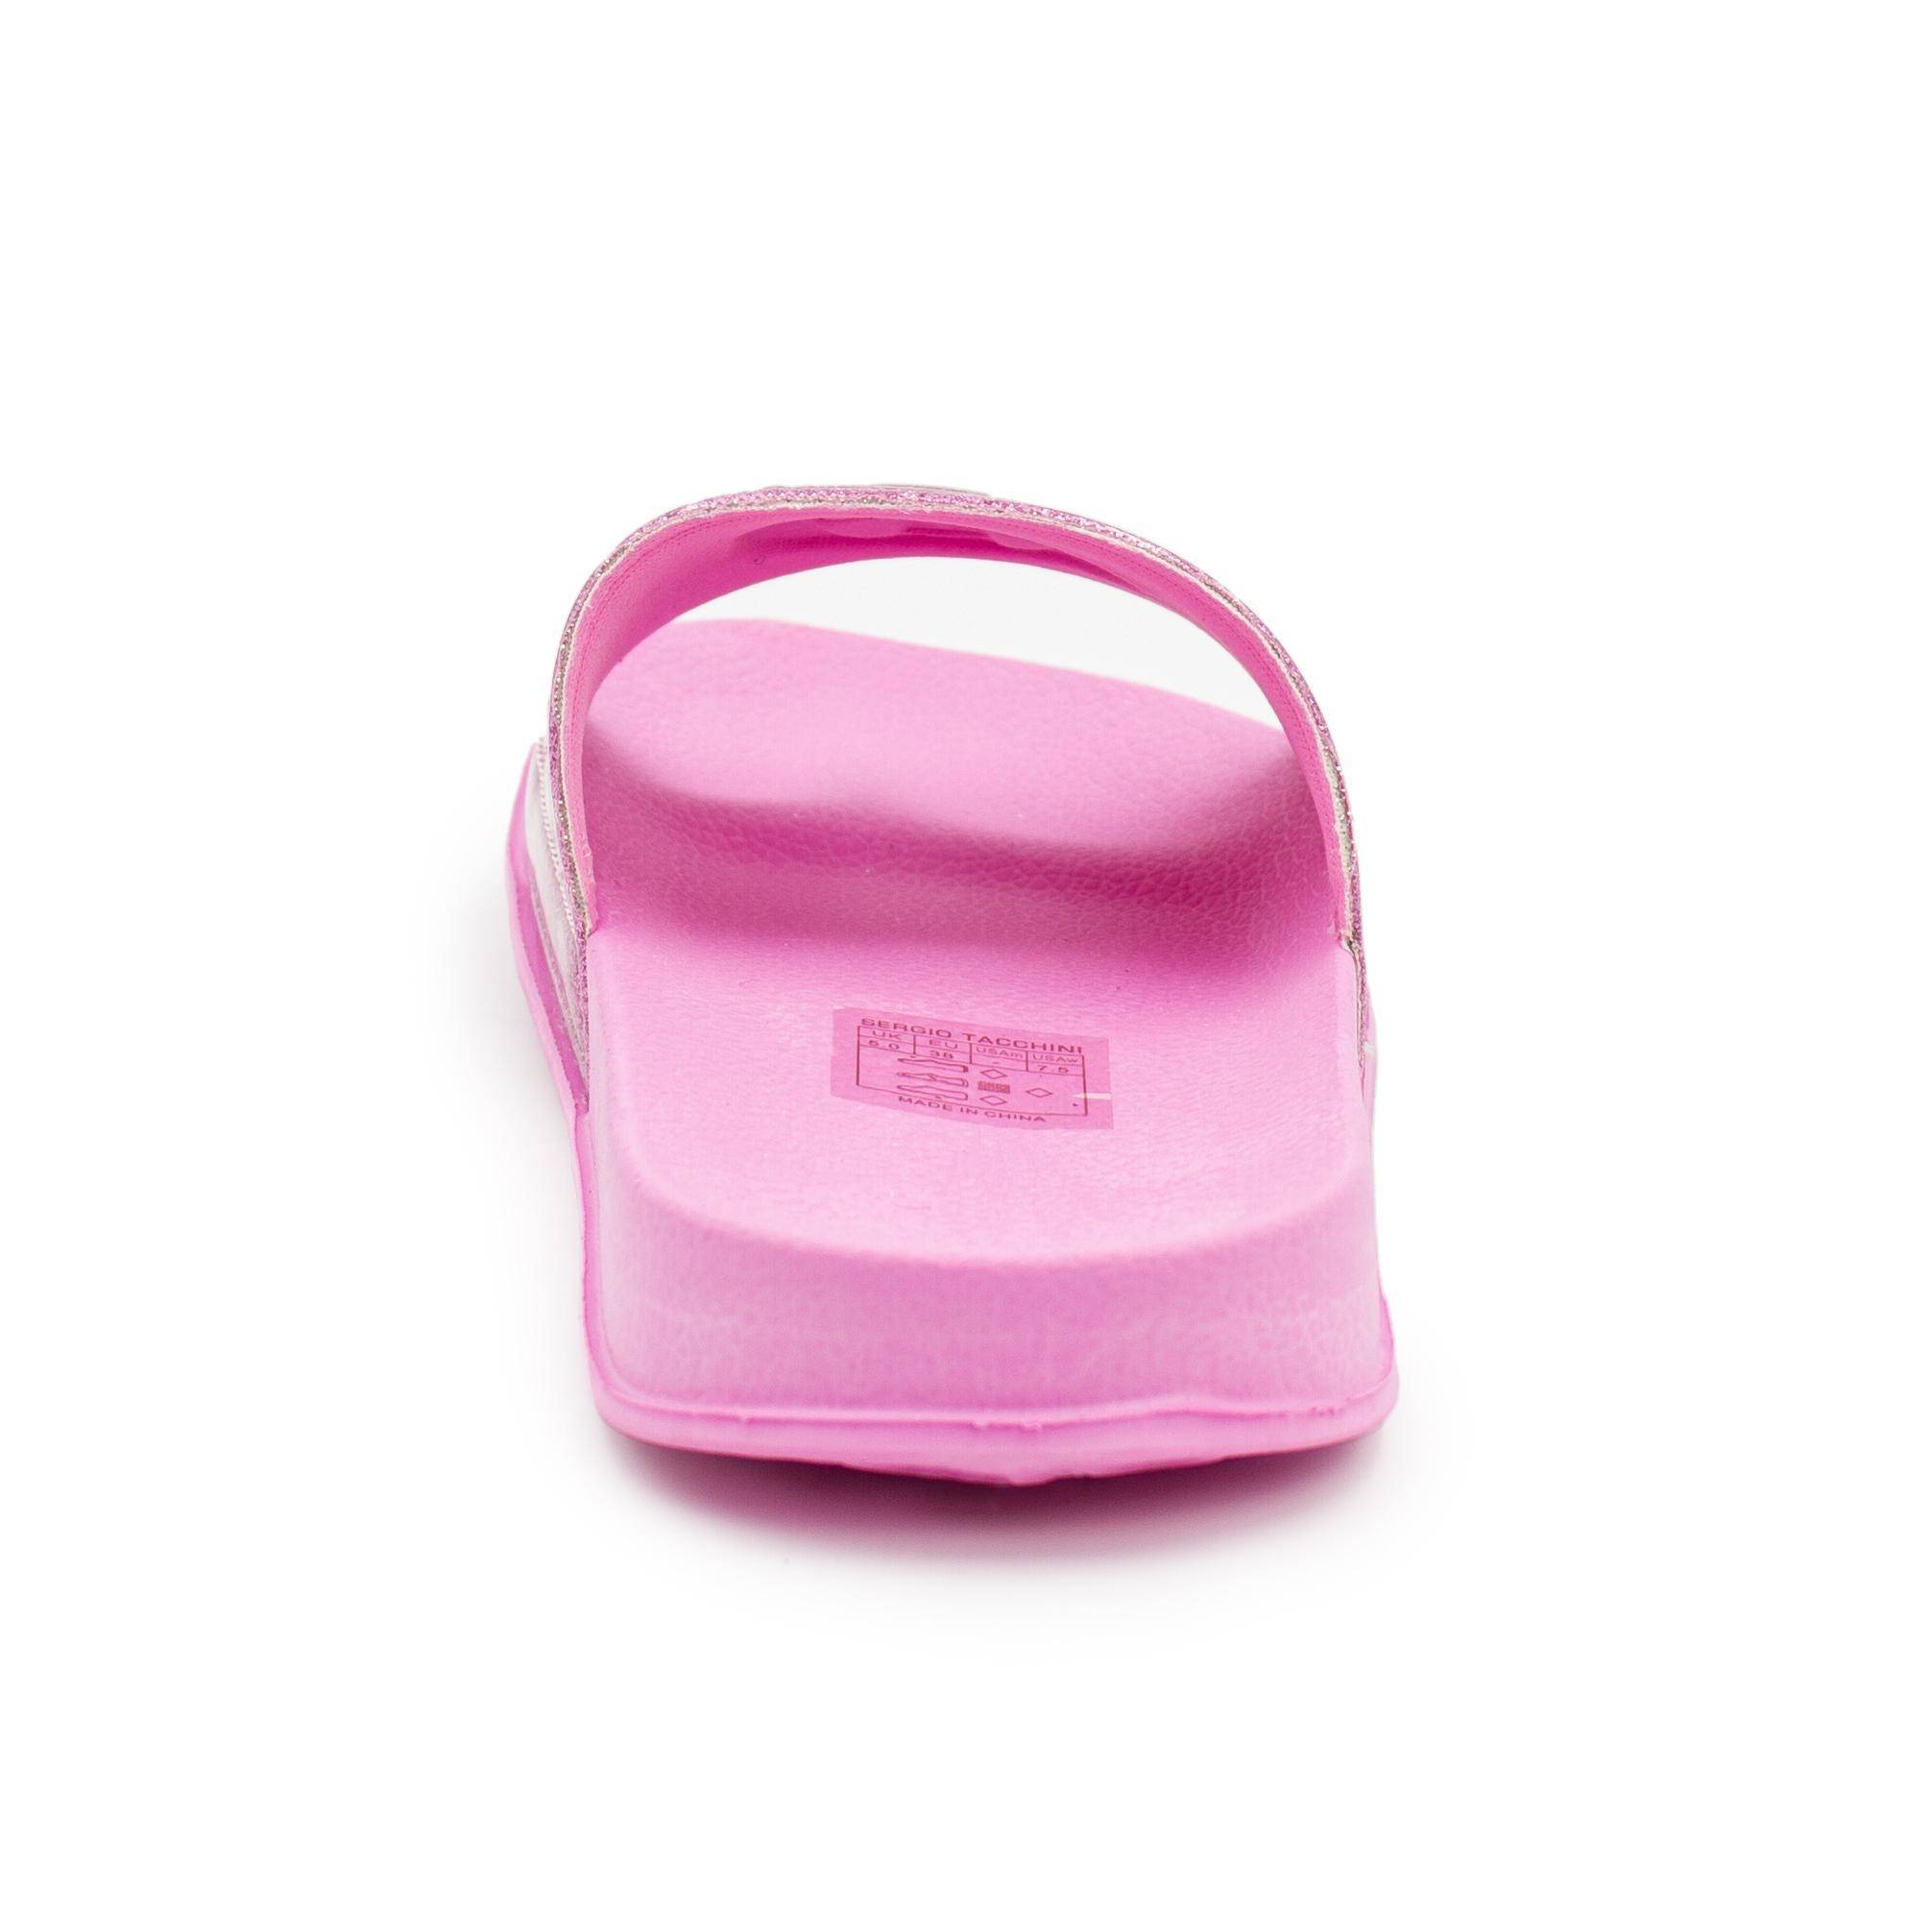 Женские сланцы Sergio Tacchini (REMIX GLITTER STW219006), розовые, цвет розовый, размер 36 - фото 4